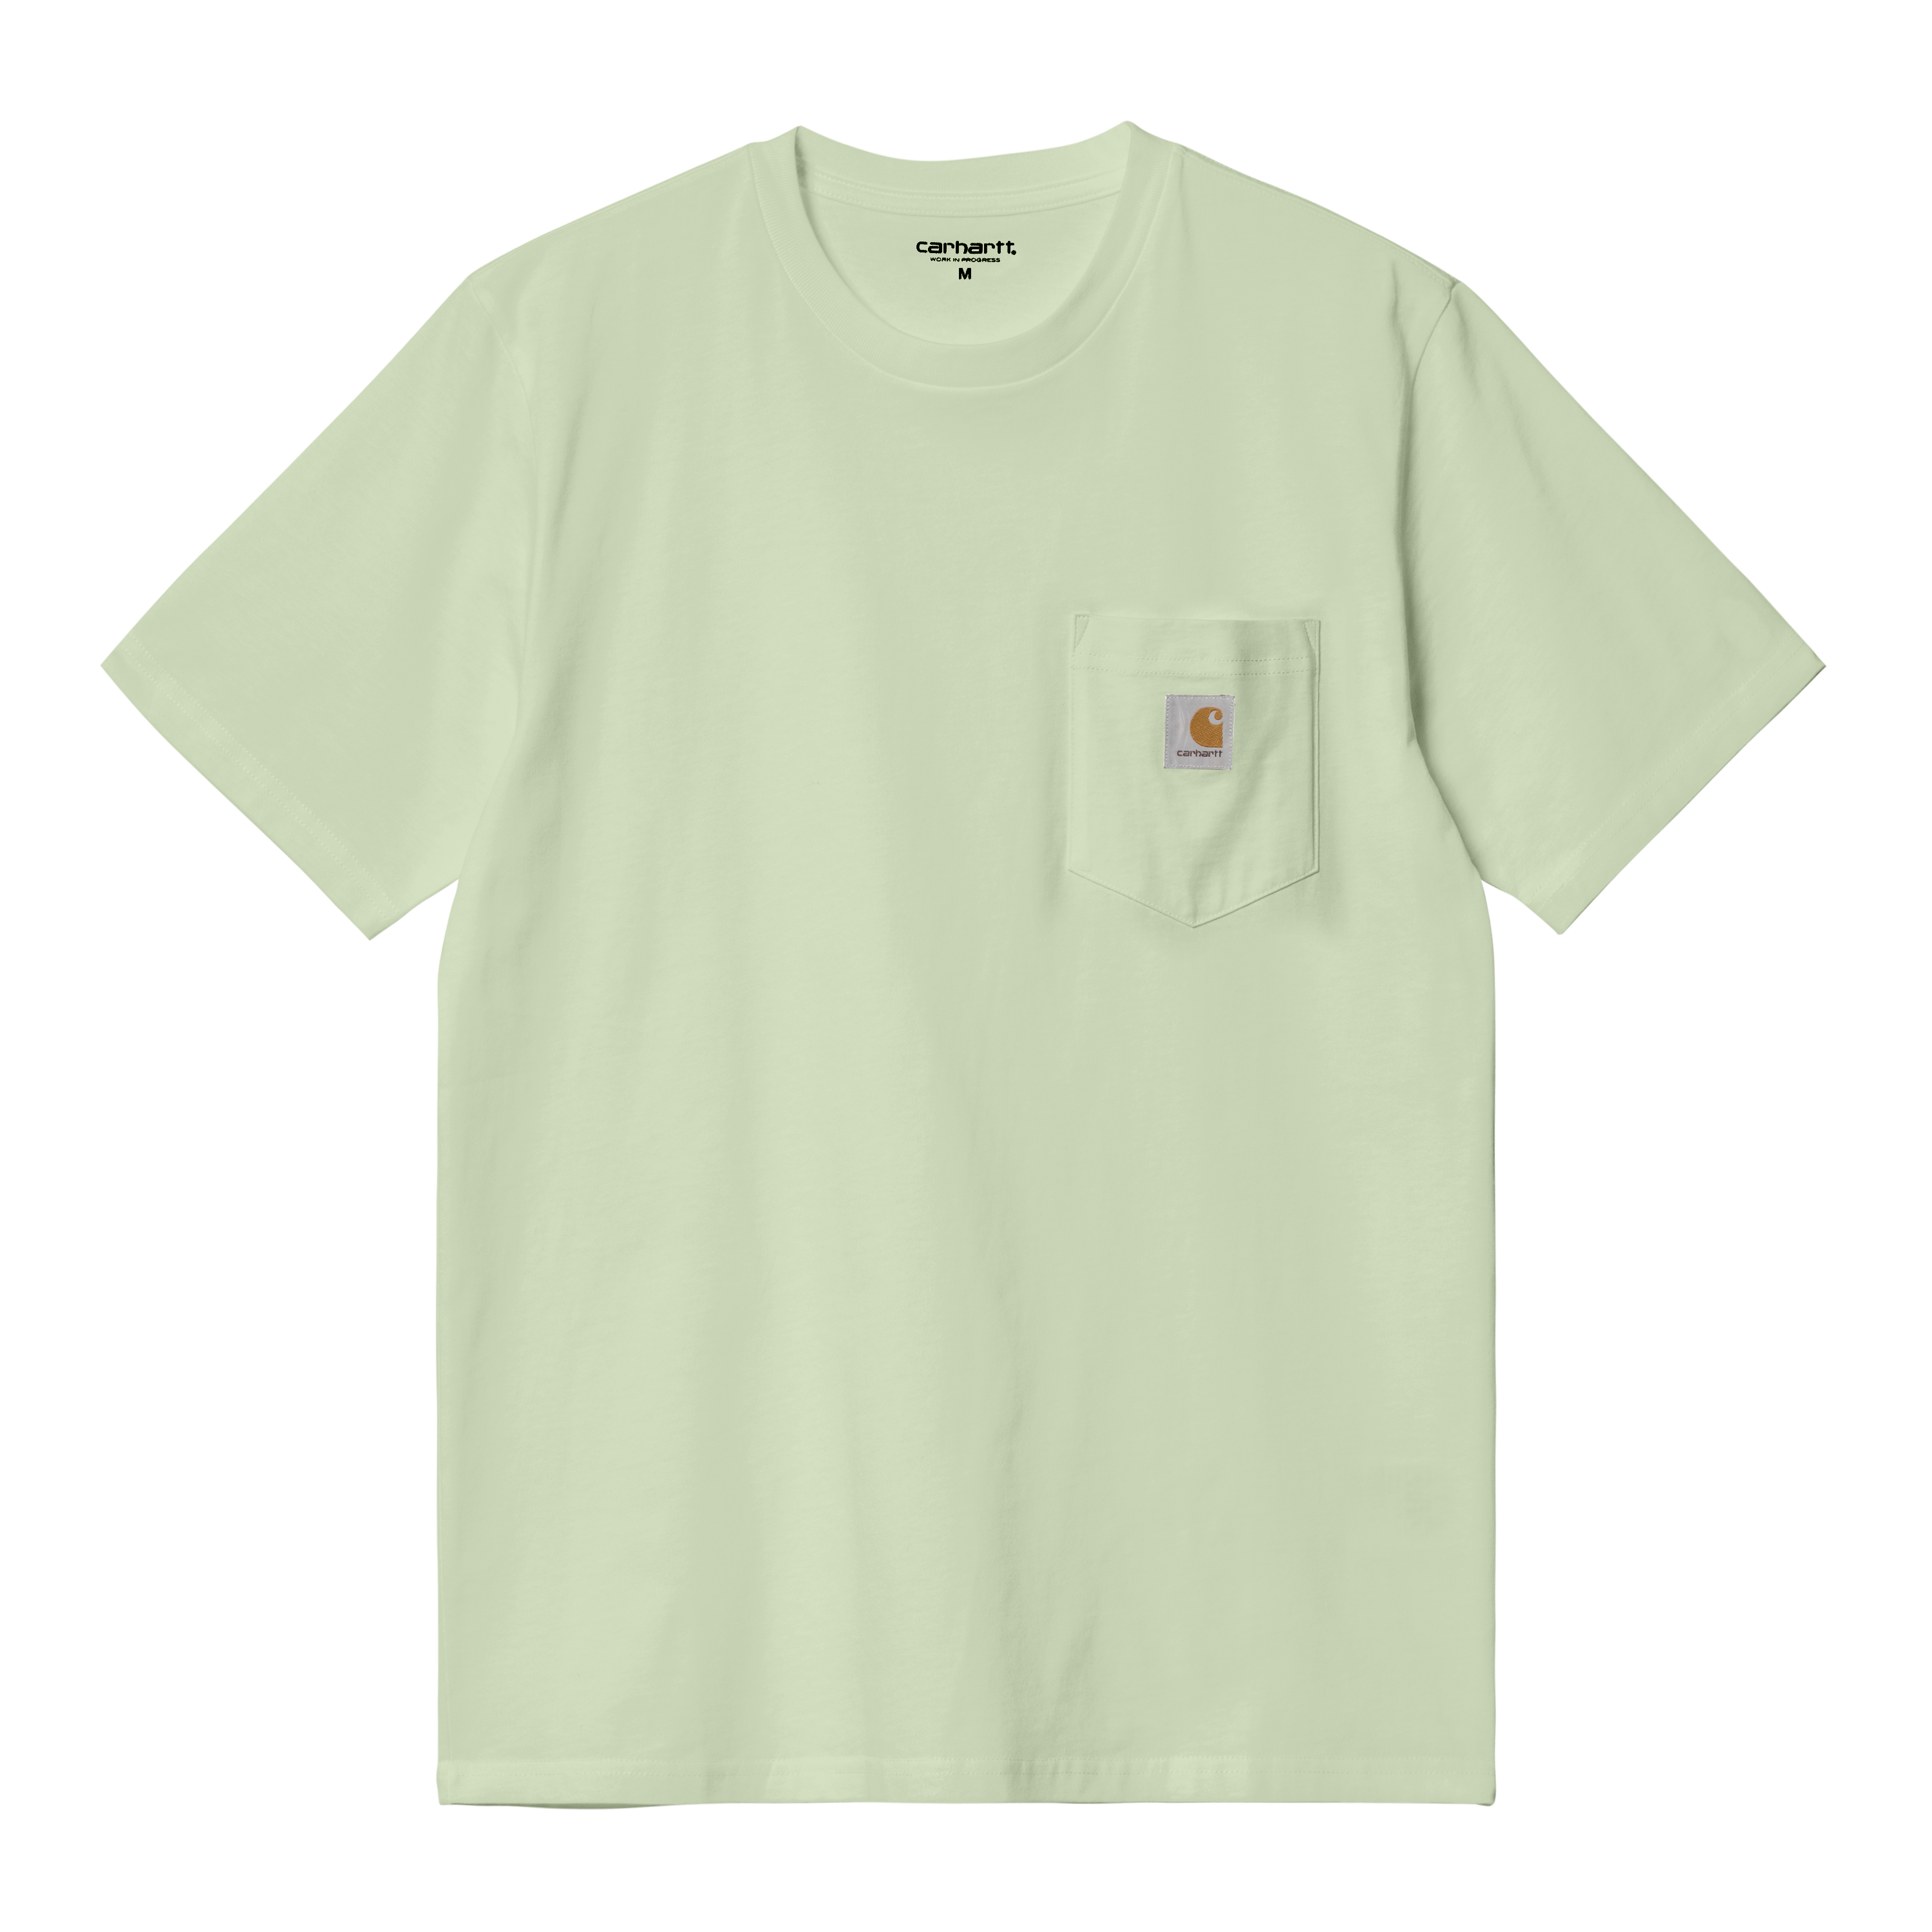 Carhartt WIP Short Sleeve Pocket T-Shirt in Green